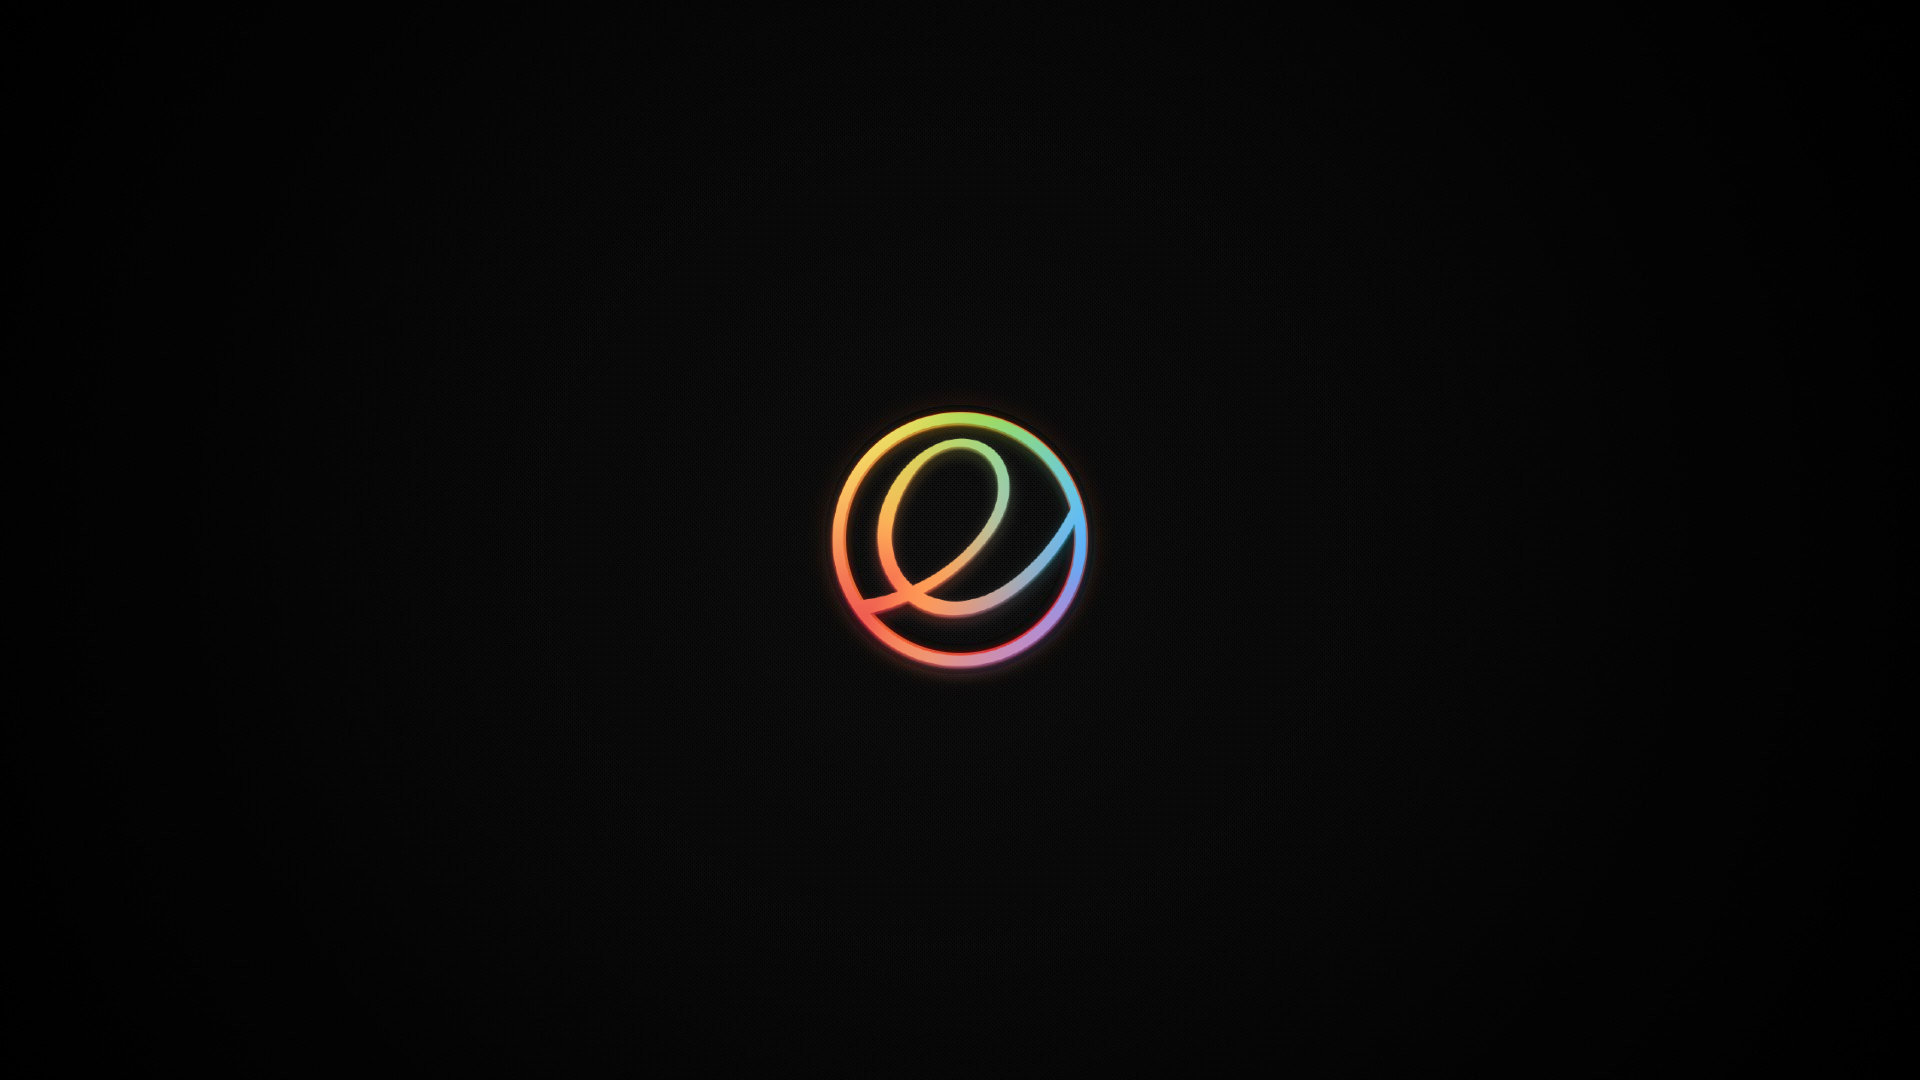 Elementary OS Logo Operating System 1920x1080